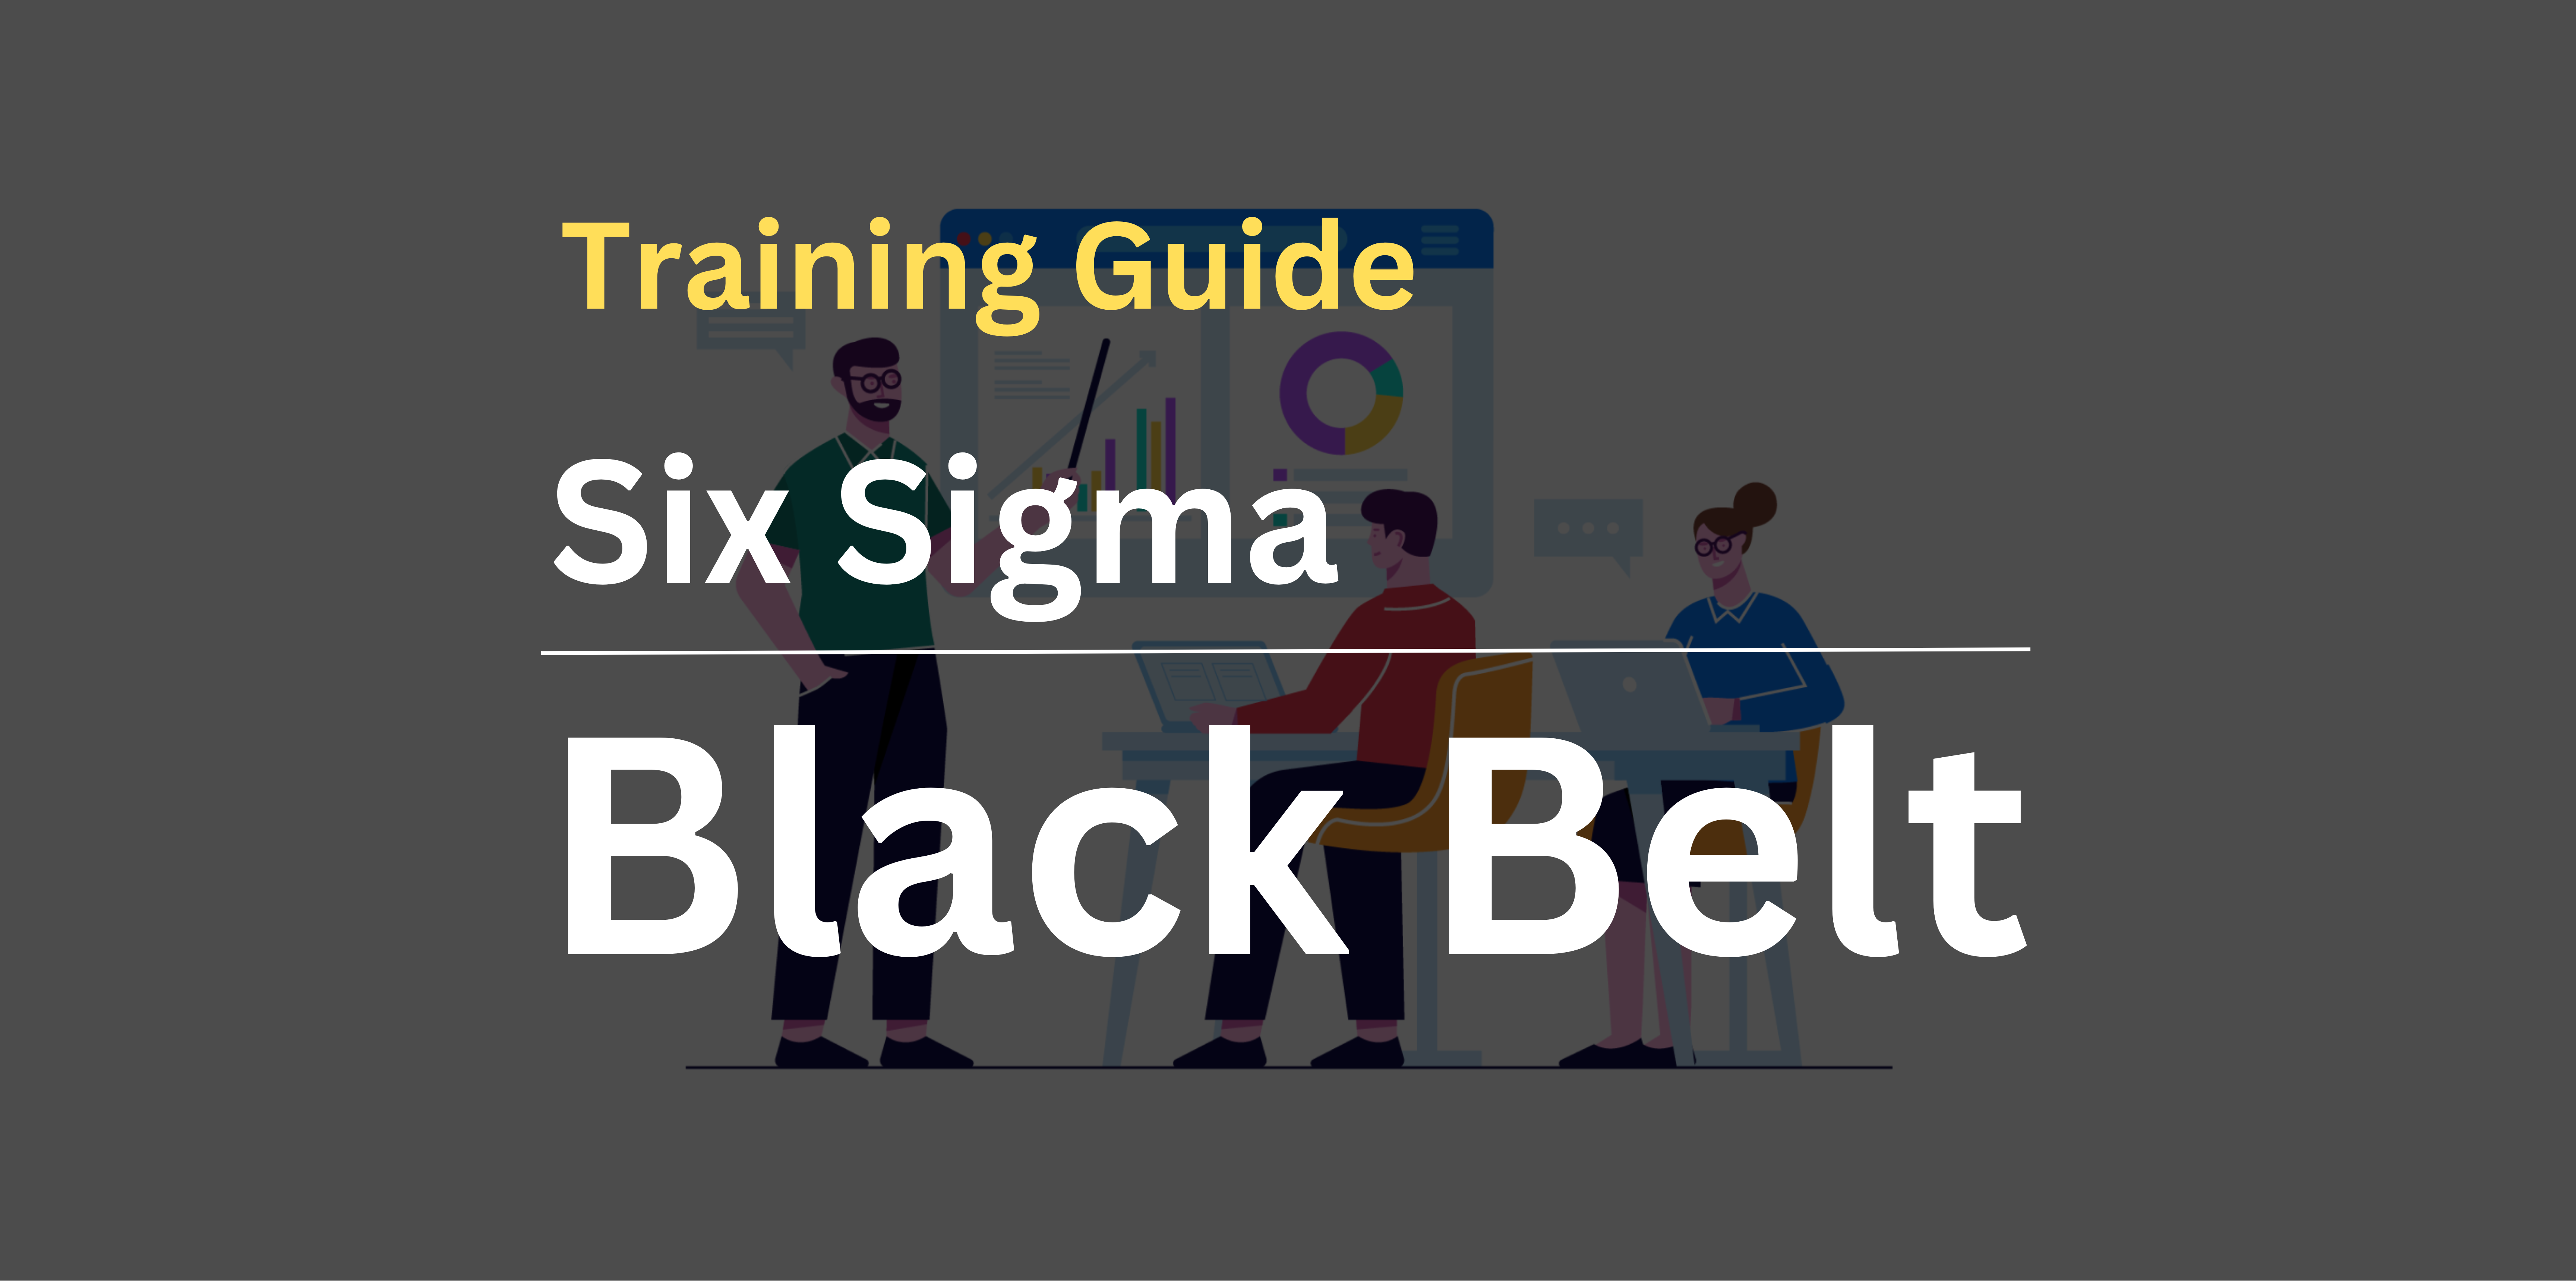 Six Sigma Black Belt Certification Training Guide